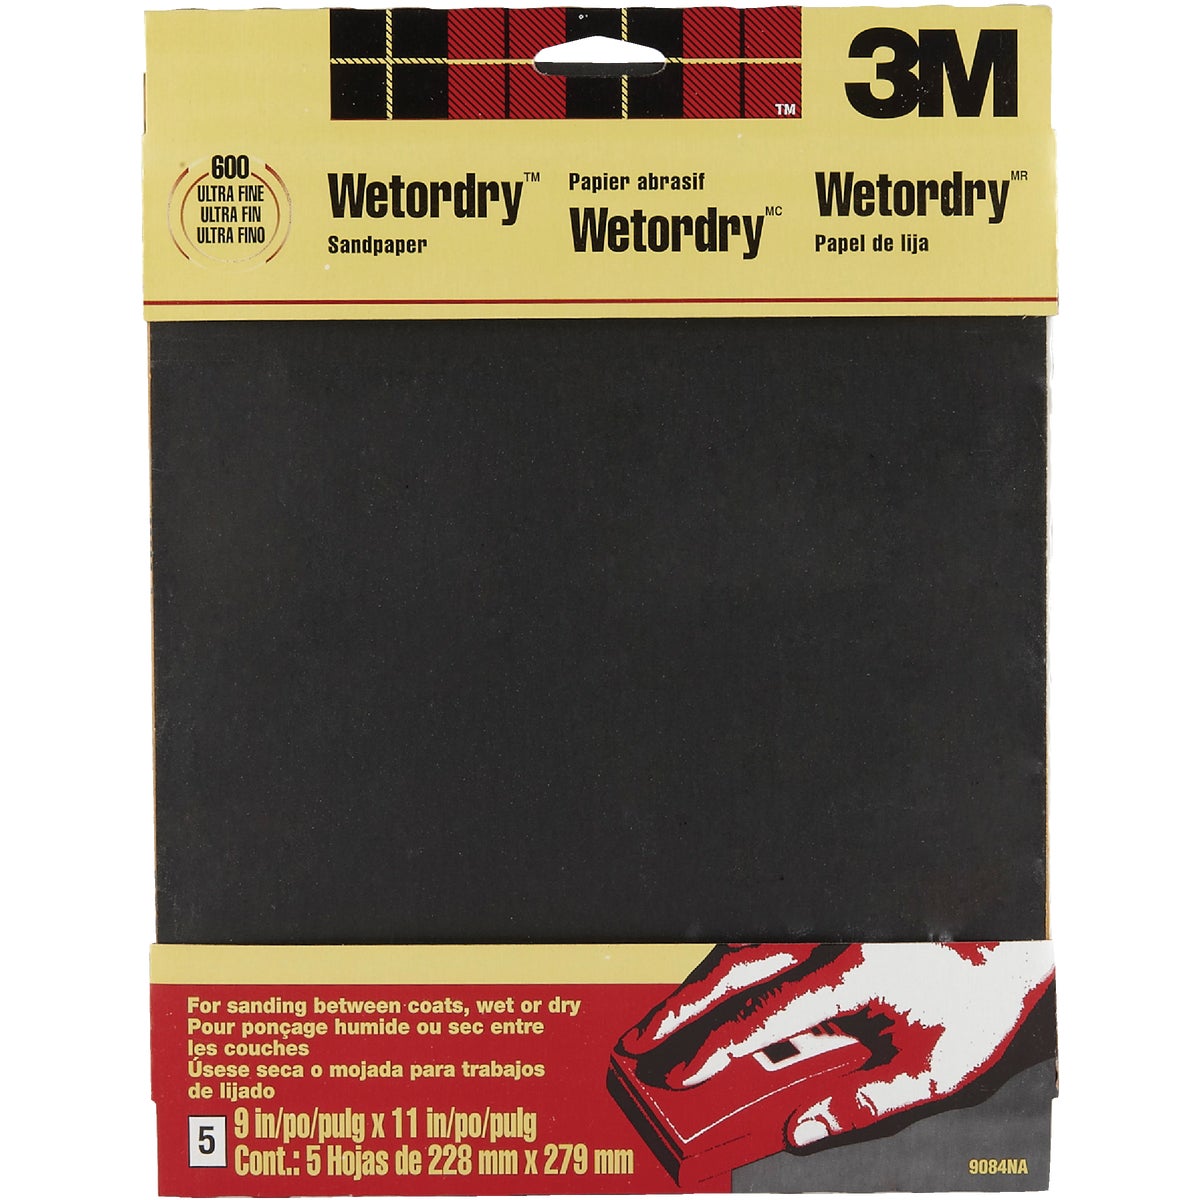 3M Wetordry 9 In. x 11 In. 600 Grit Ultra Fine Sandpaper (5-Pack)